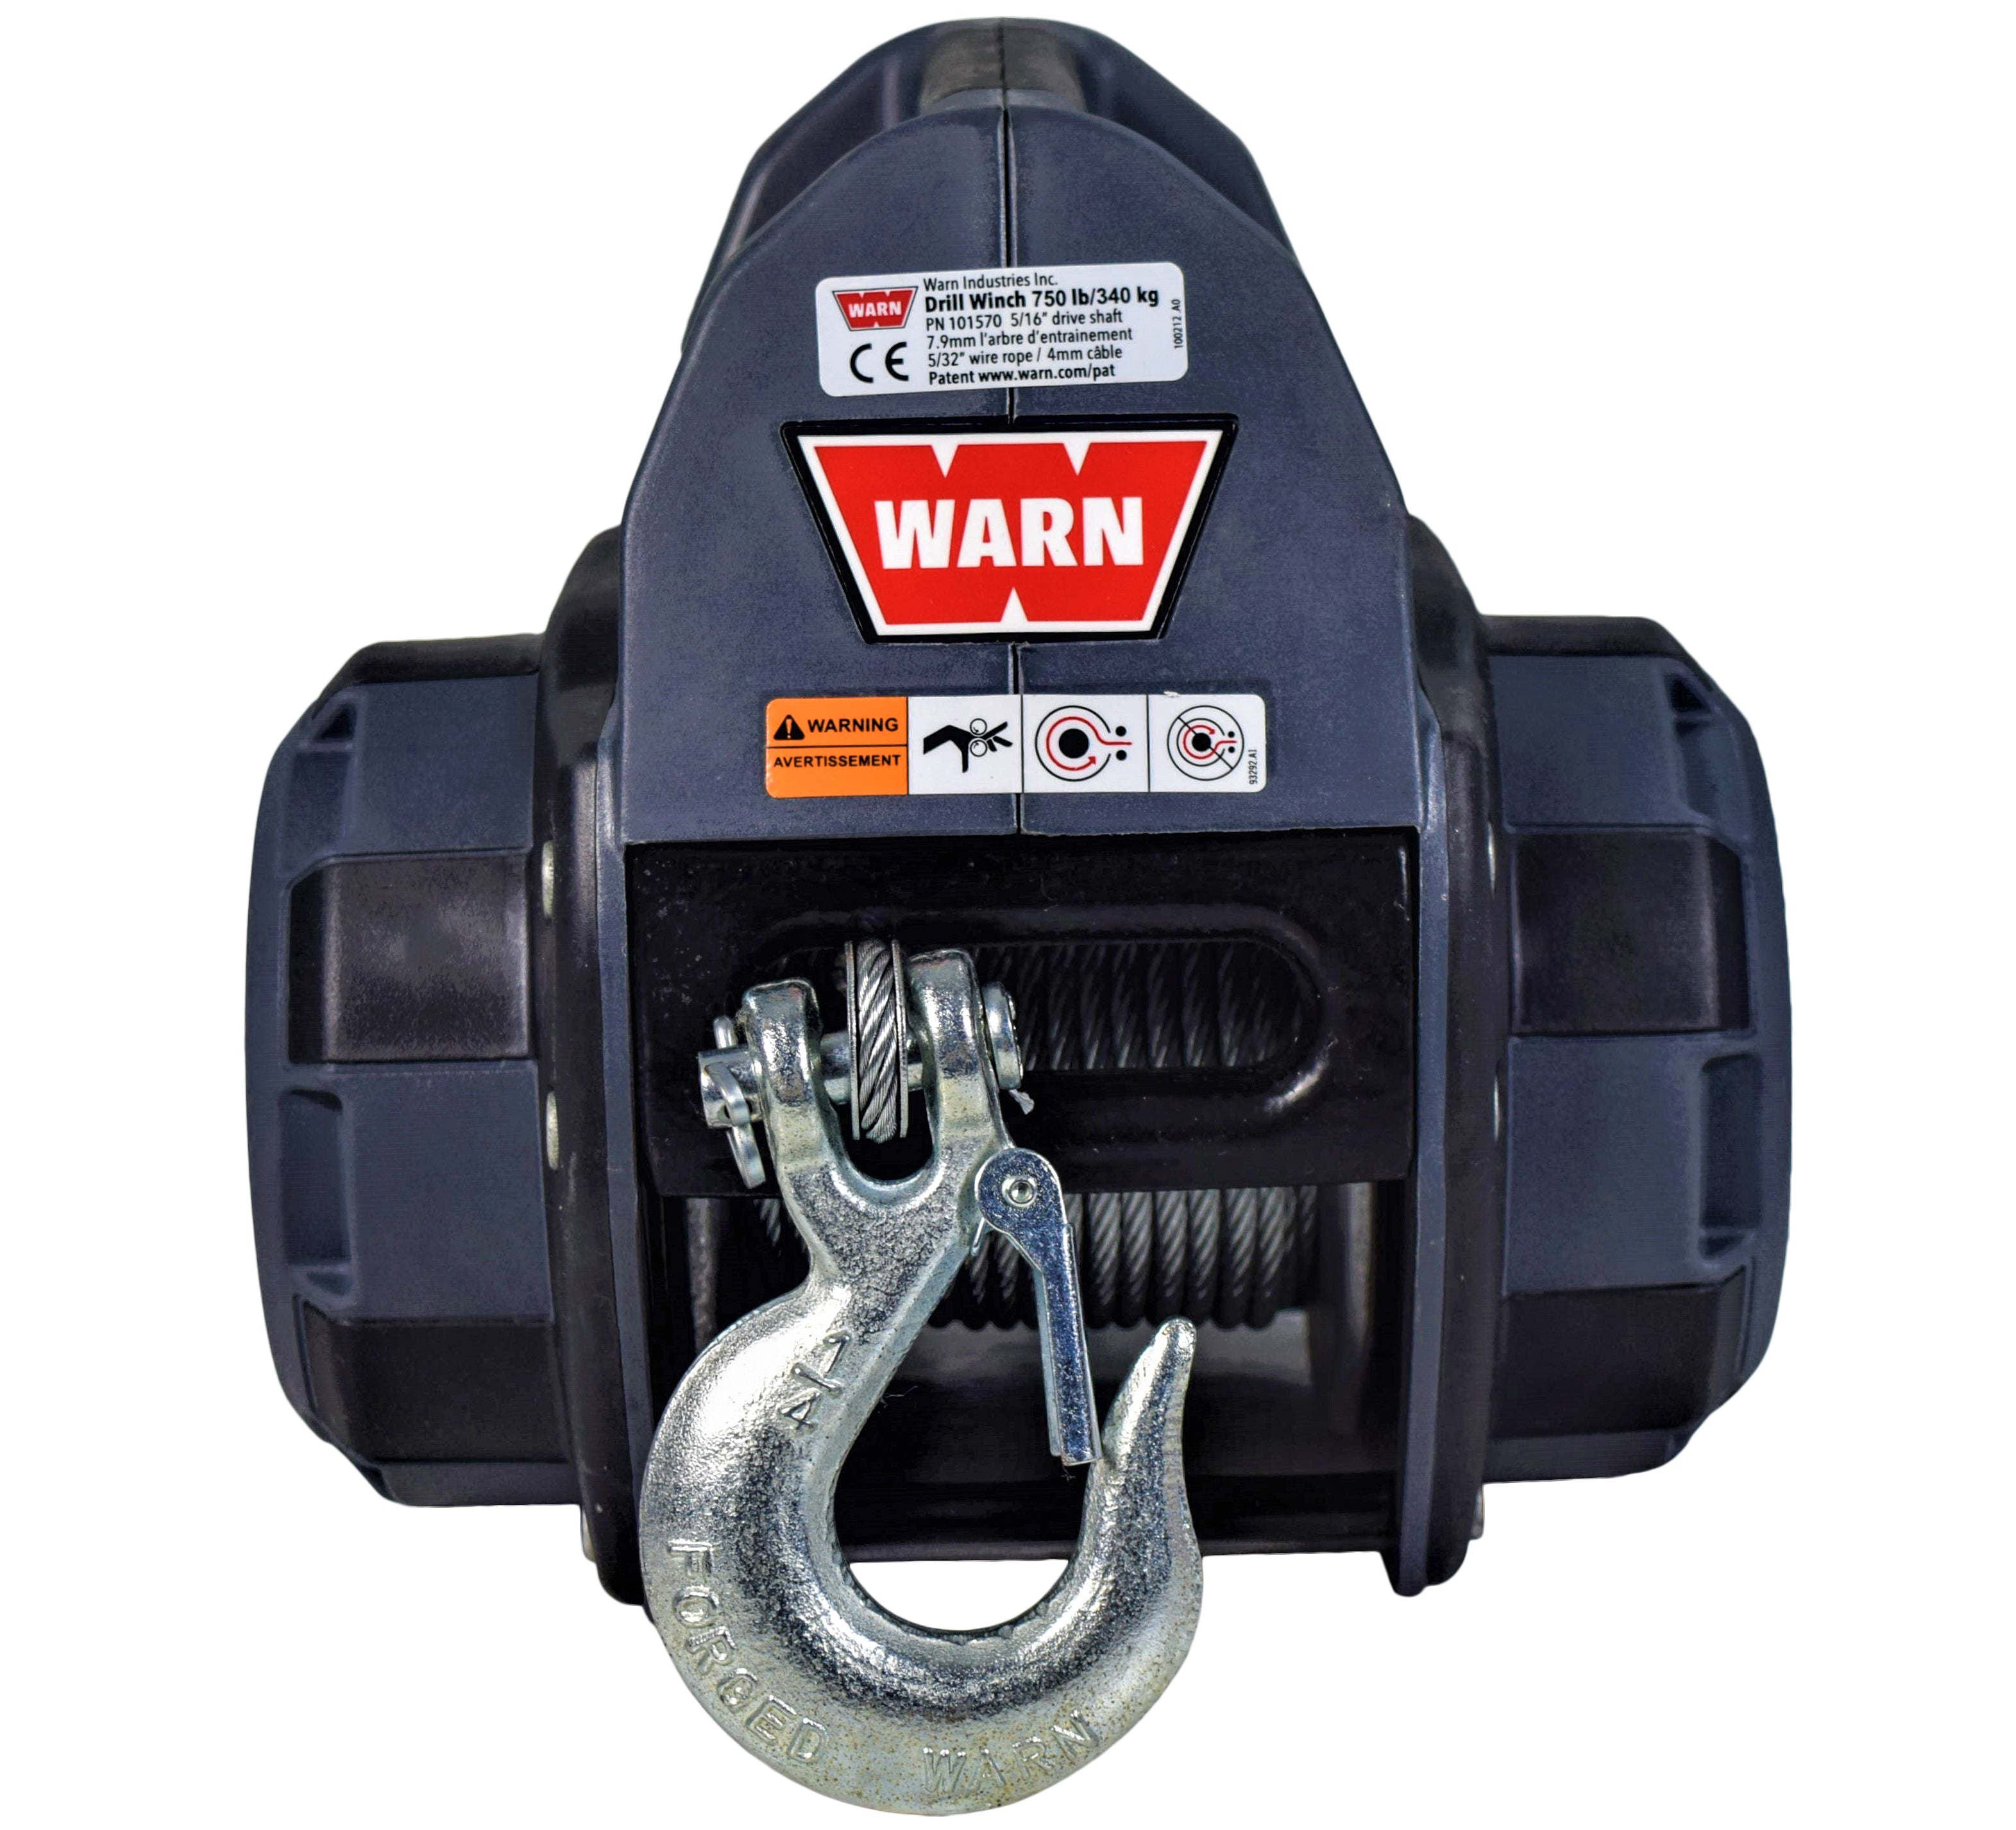 Warn-101570-Drill-Winch-750-lbs-Capacity-40-Steel-Rope-Free-spool-Clutch-image-4